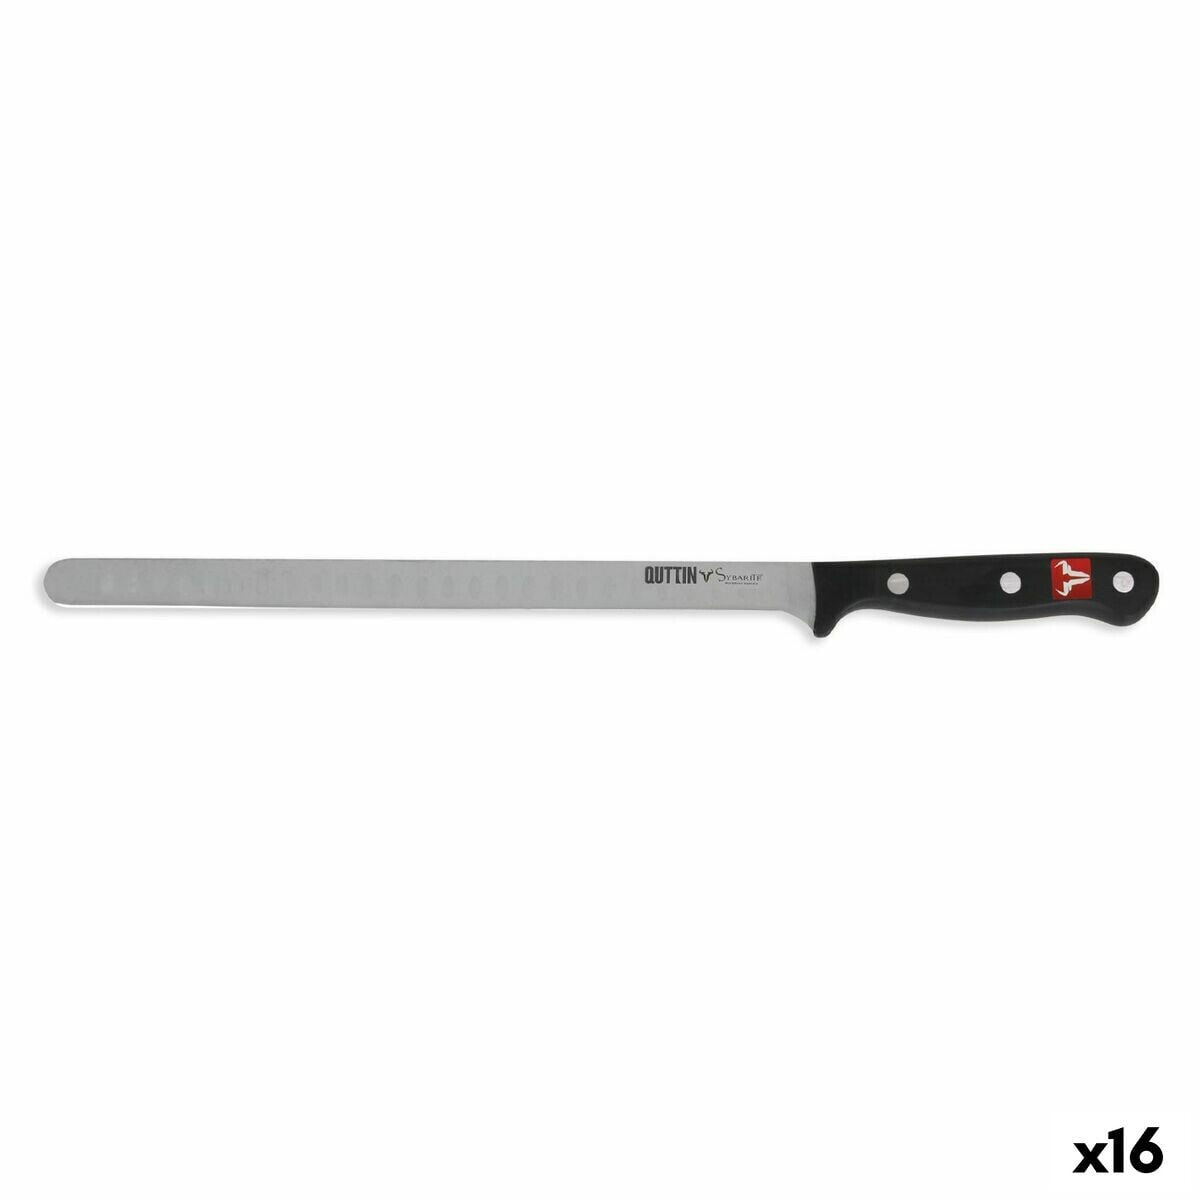 Ham knife Quttin Sybarite Black Silver 28 cm (16 Units)